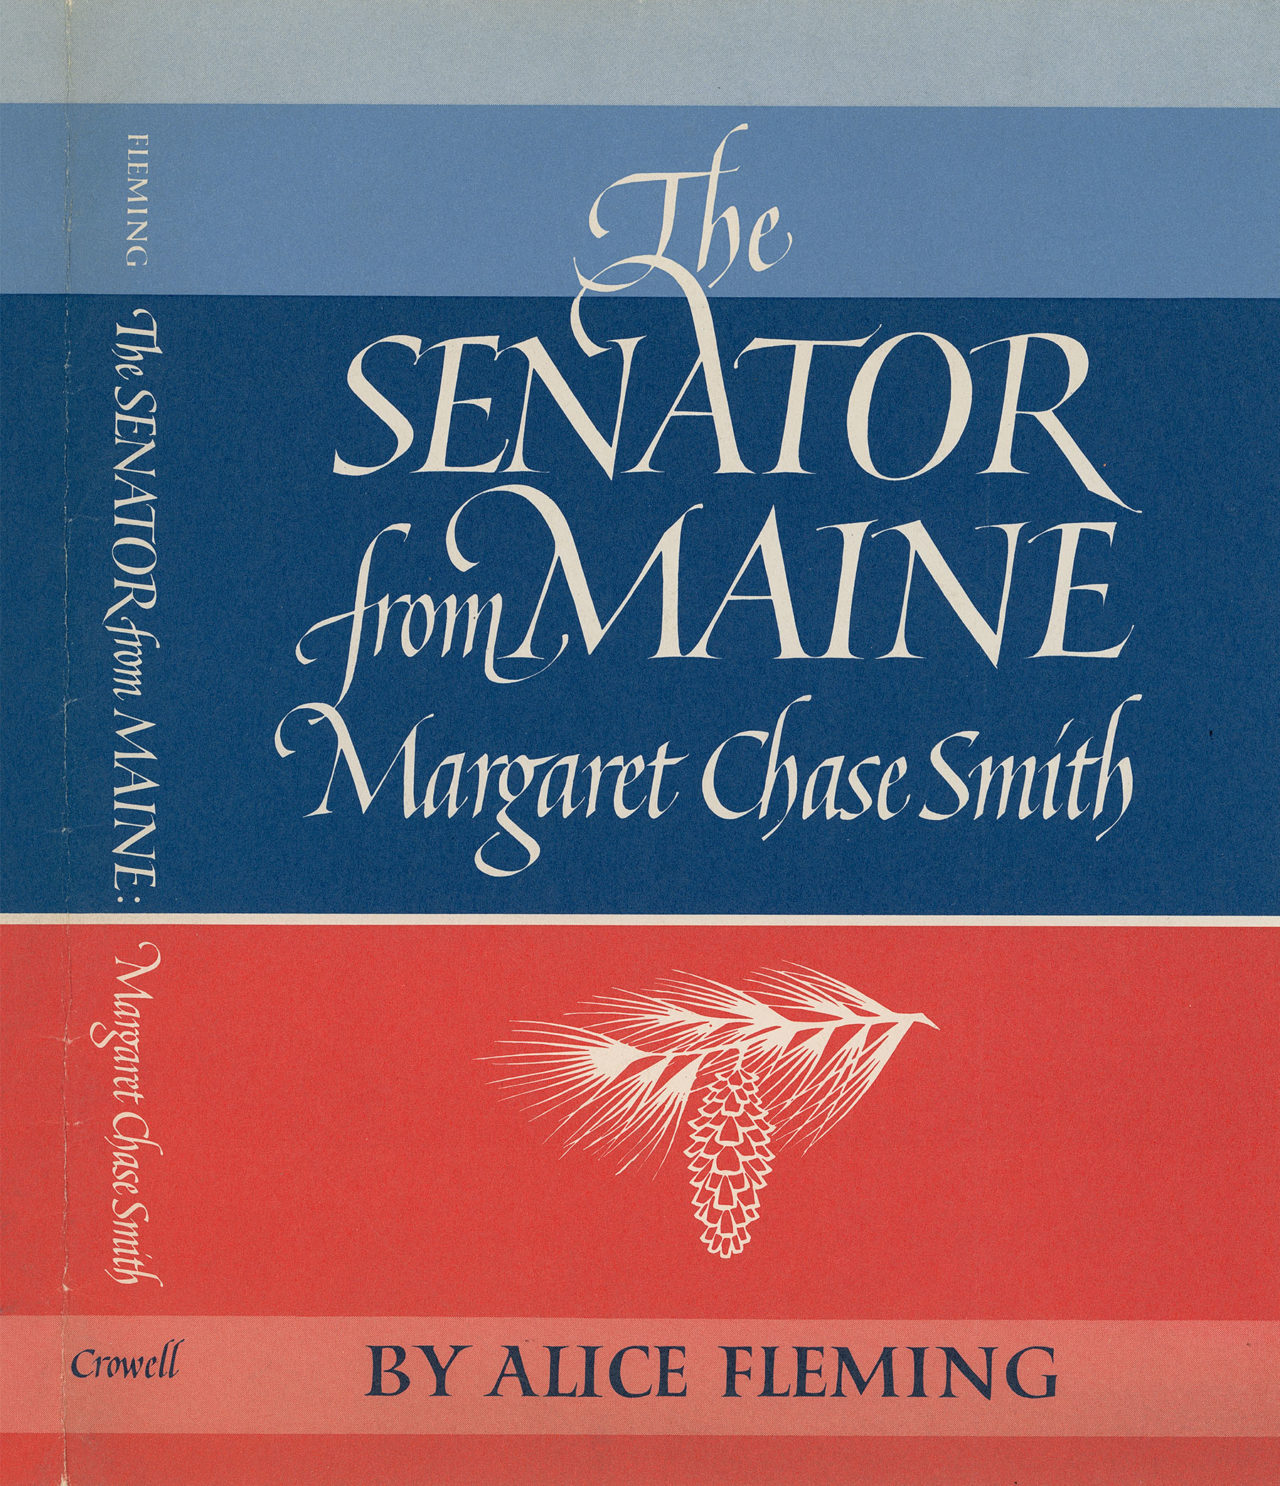 The Senator from Maine